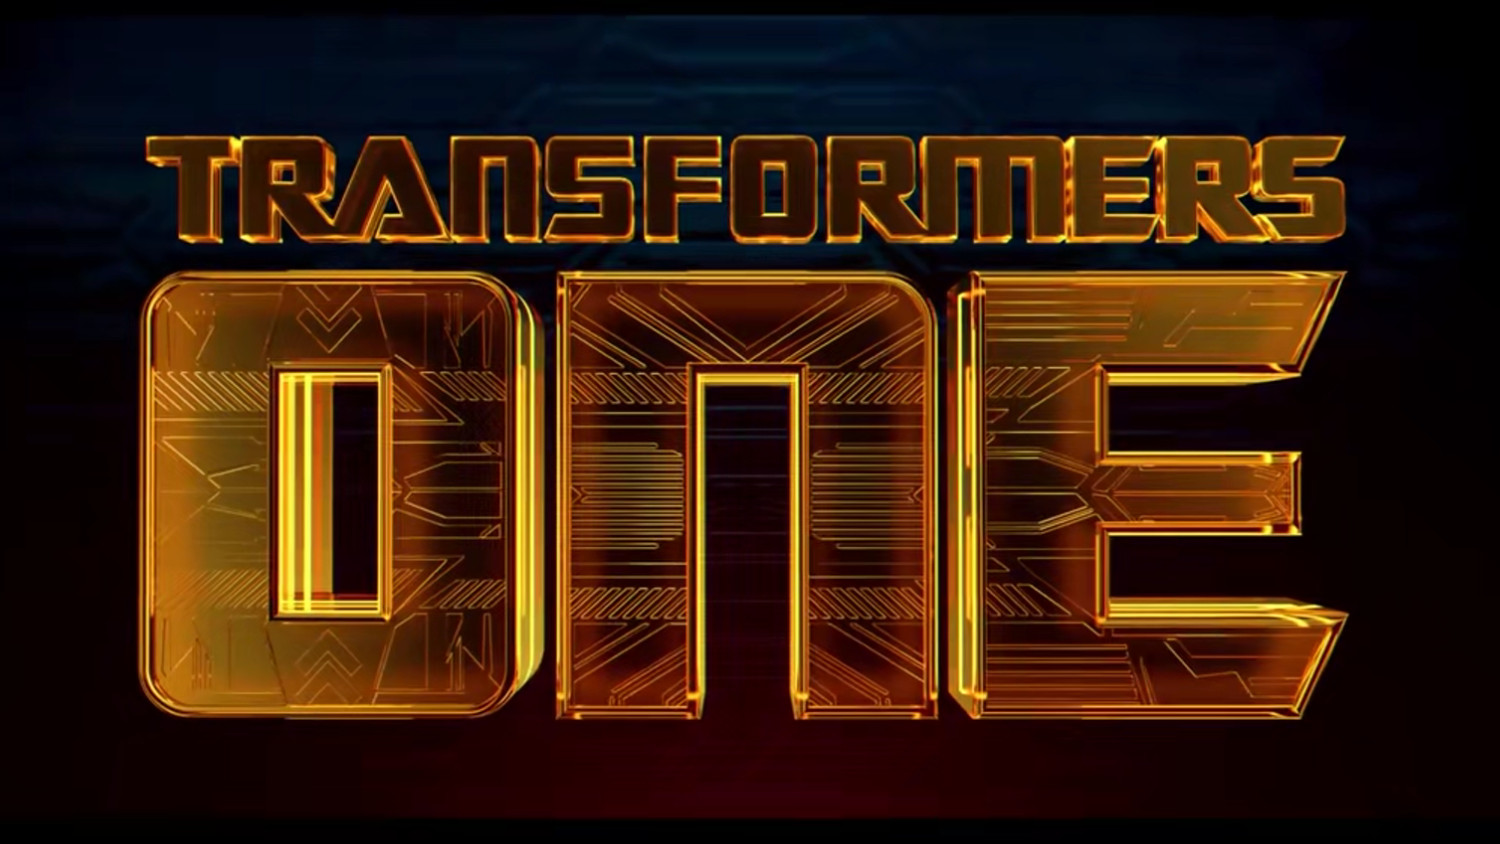 ‘Transformers One’ Trailer On The Way: Chris Hemsworth, Scarlett Johansson, More